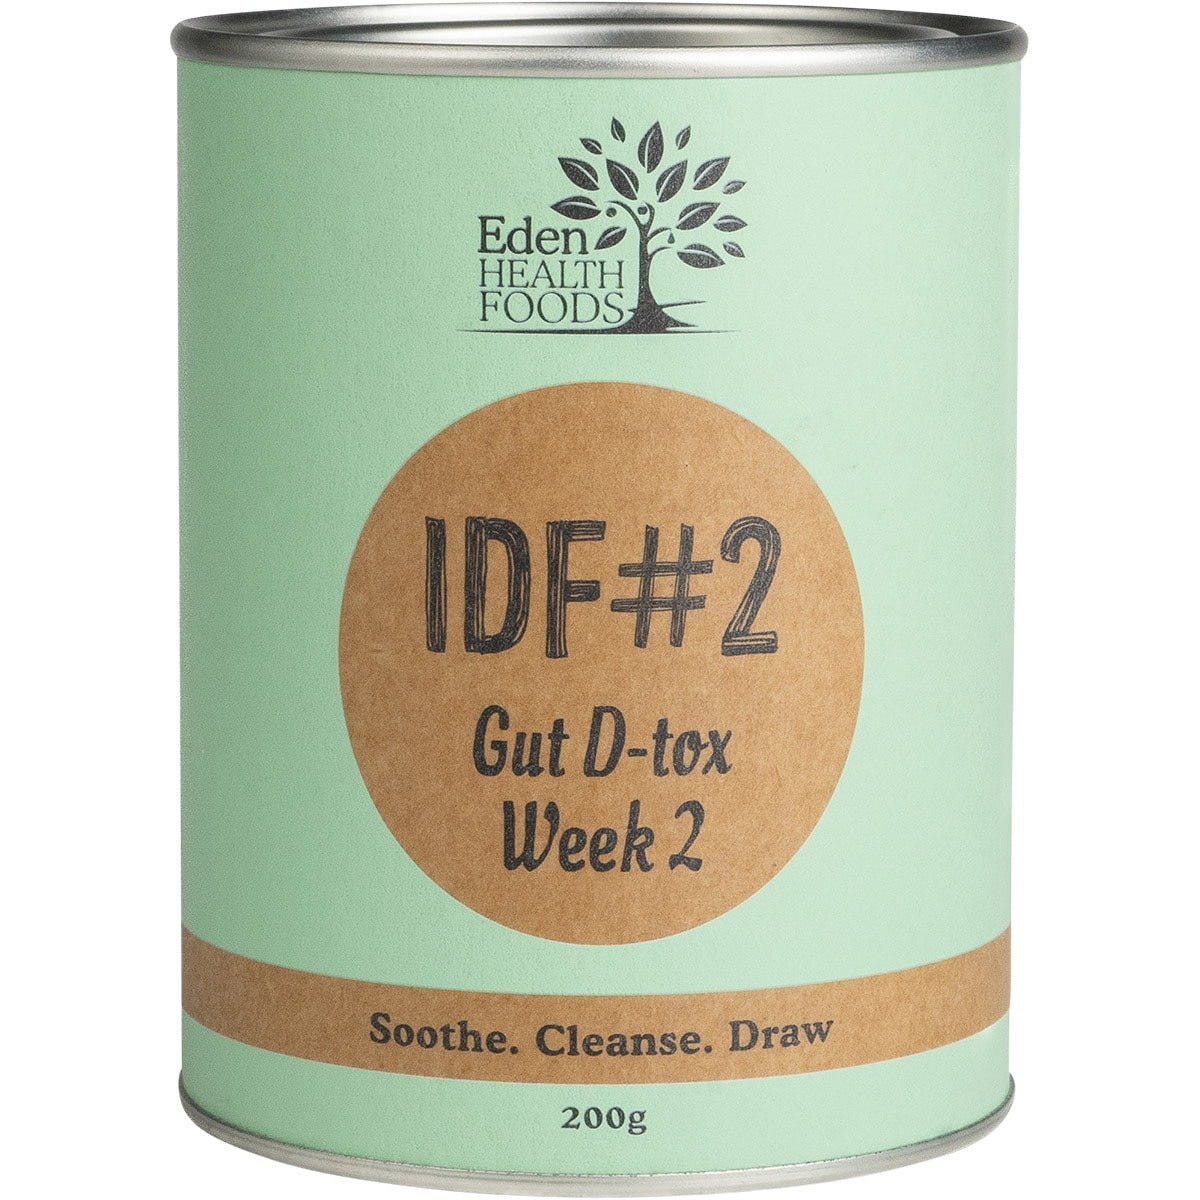 Eden Healthfoods IDF#2 Gut D-tox Week 2 200g - Dr Earth - Digestion & Gut Health, Detox